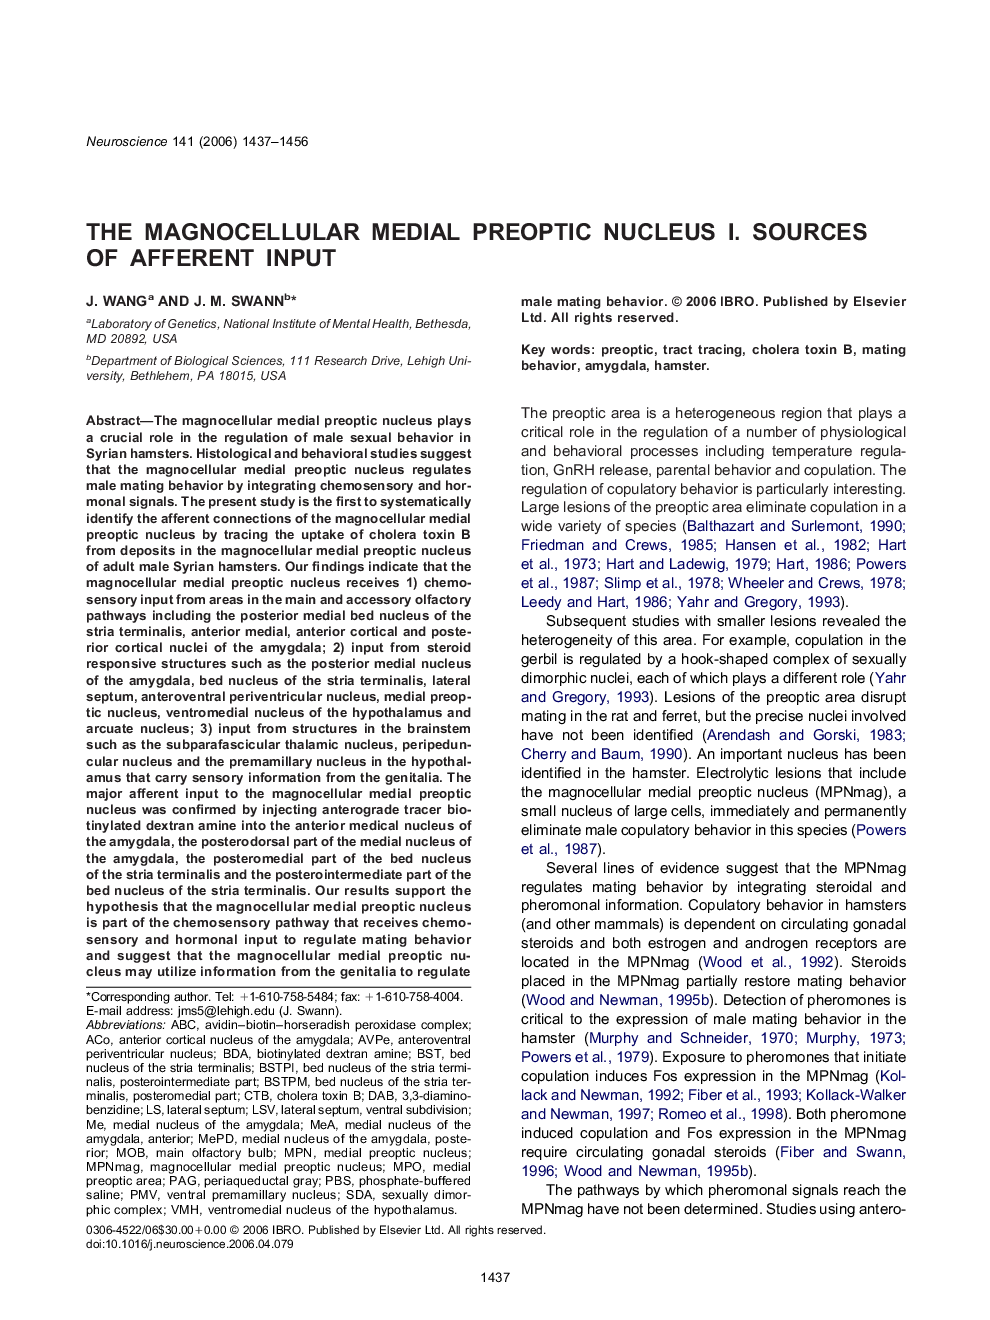 The magnocellular medial preoptic nucleus I. sources of afferent input